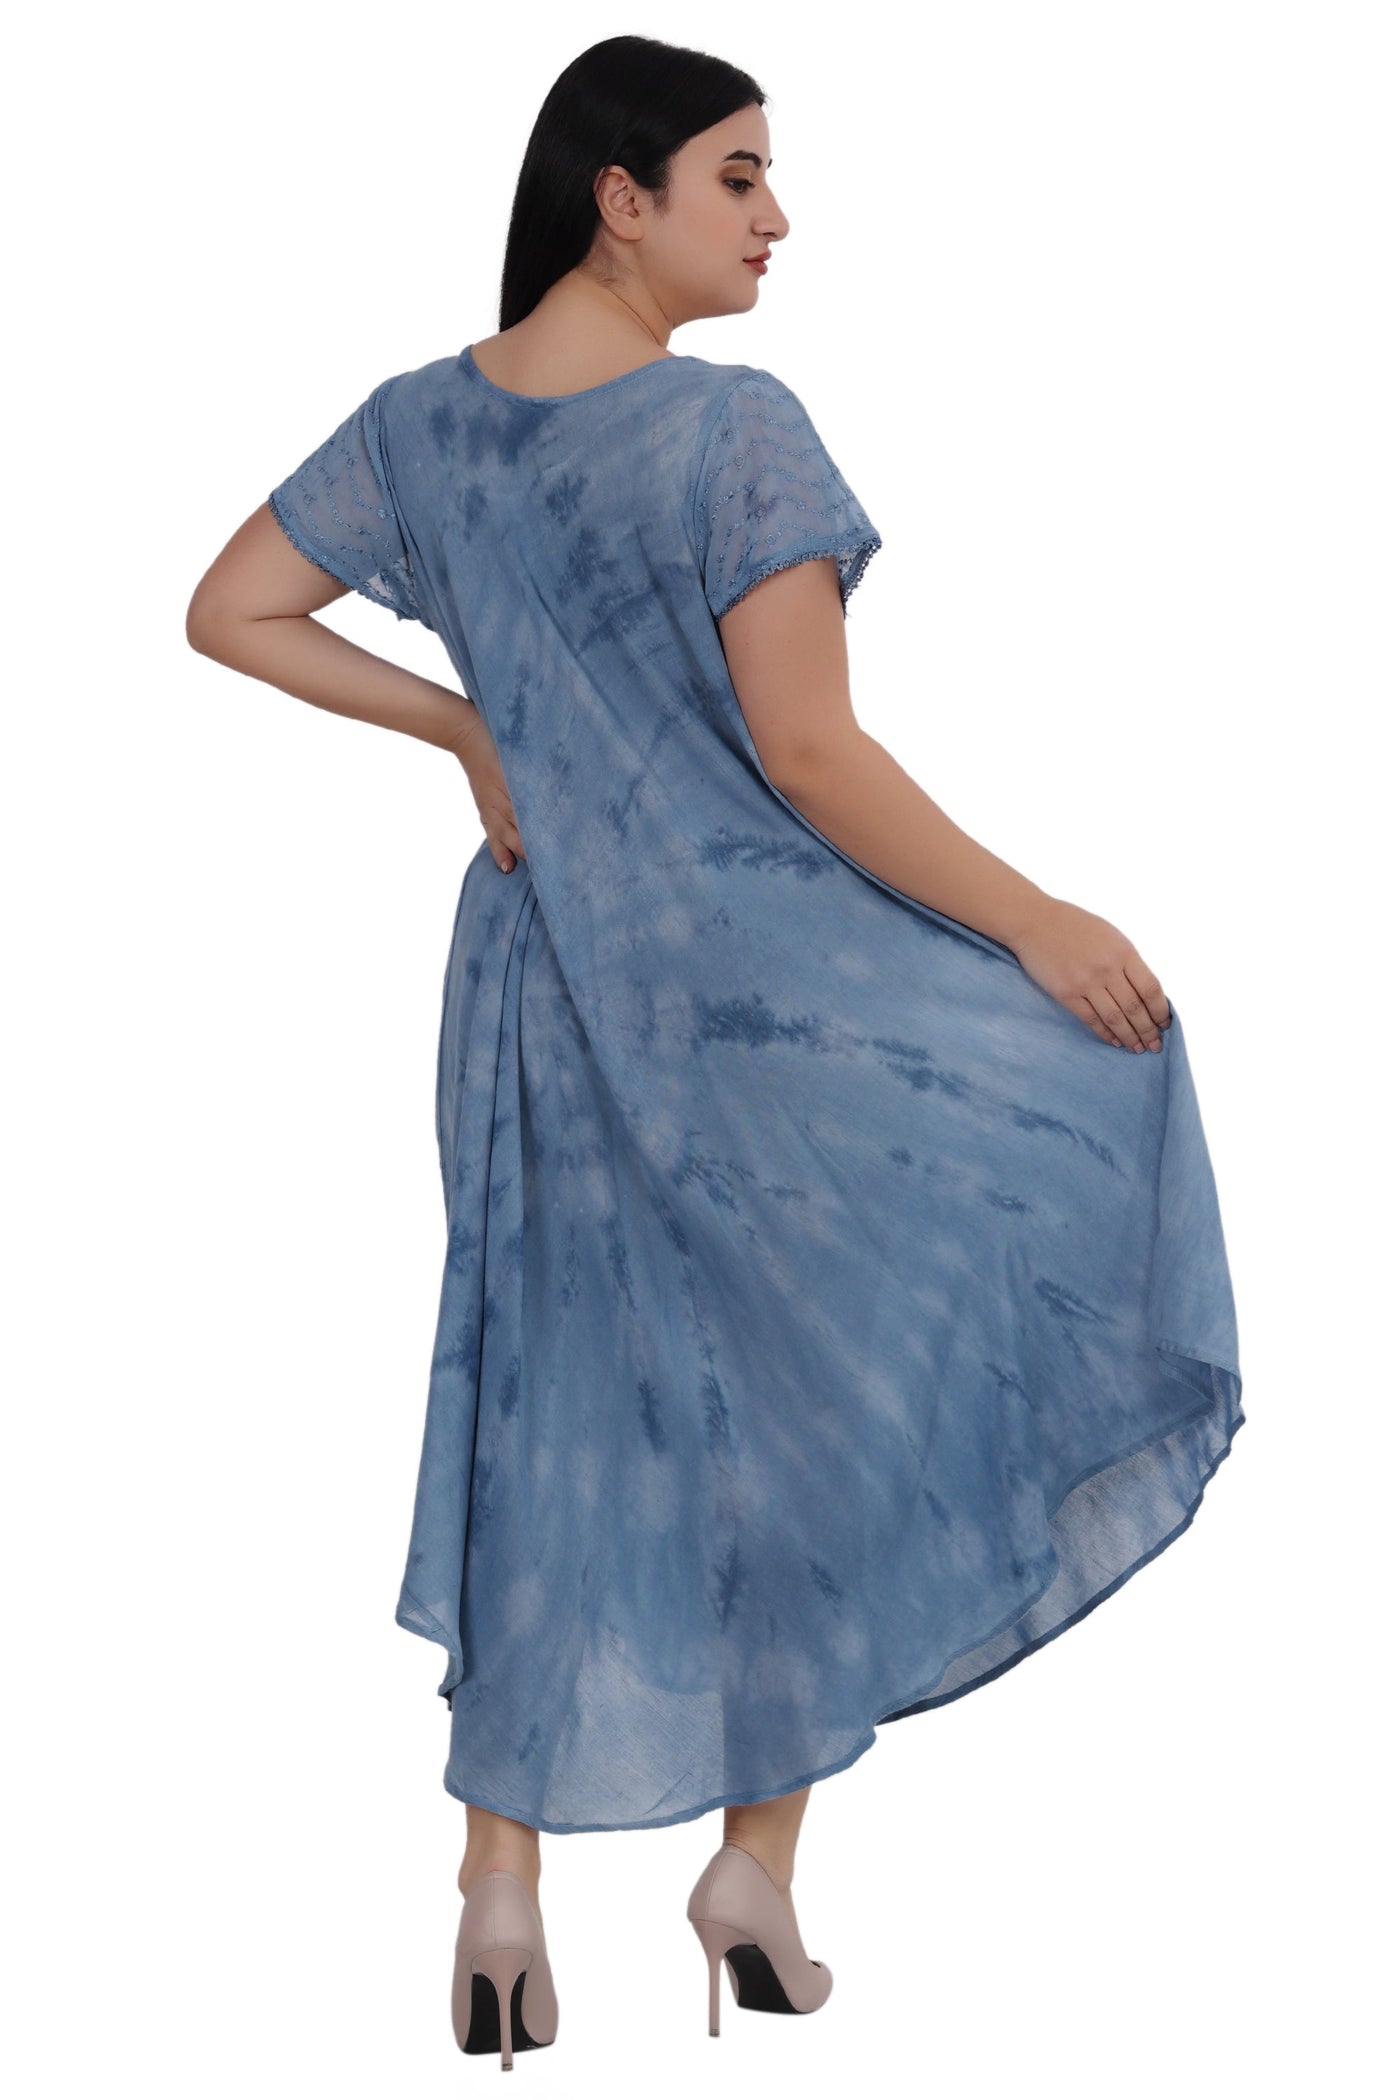 Cap Sleeve Tie Dye House Dress 522186SLV - Advance Apparels Inc